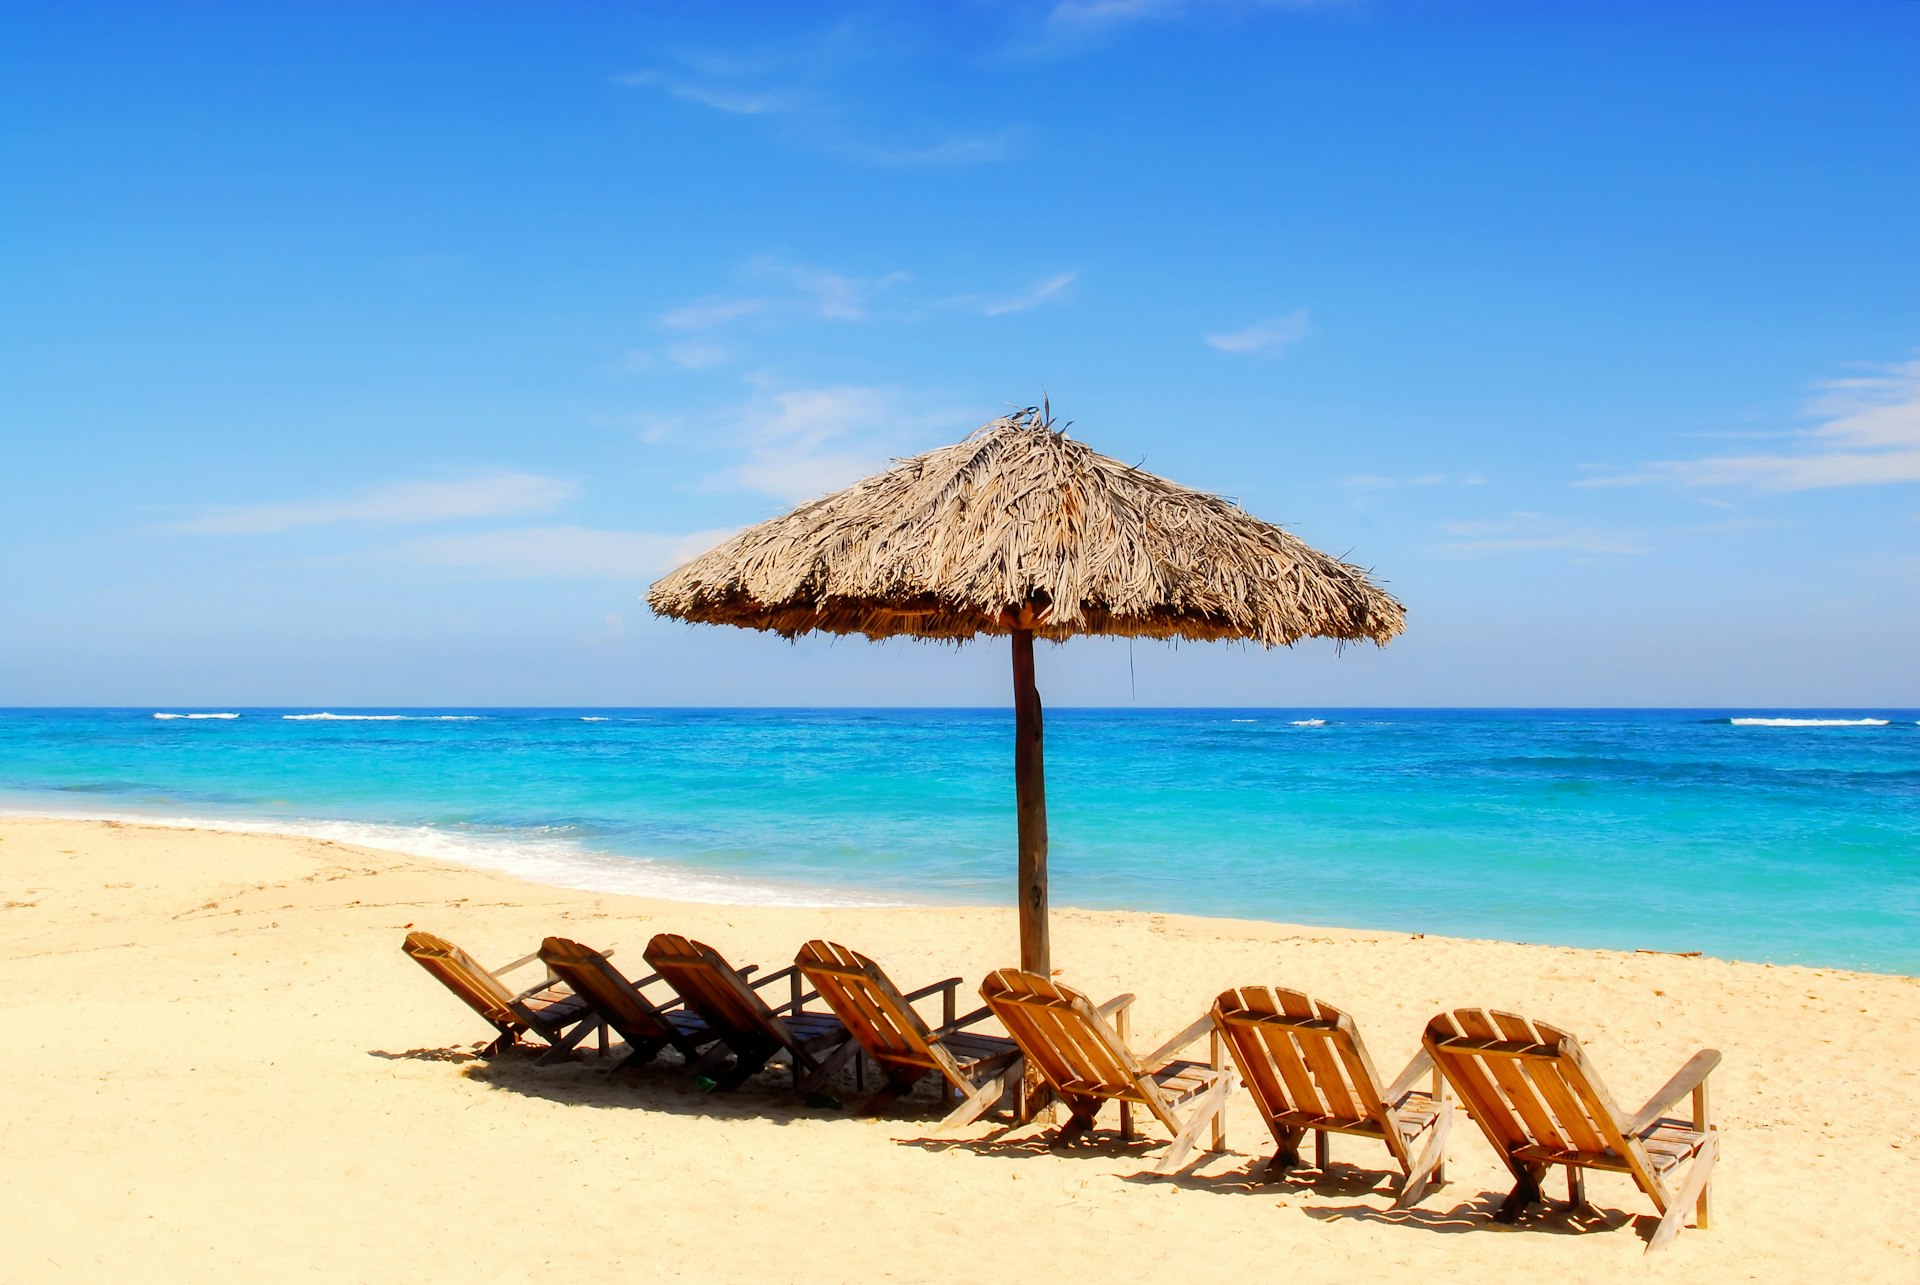 Umbrella and wooden chairs on a tropical Caribbean beach in Maguana Beach, Cuba